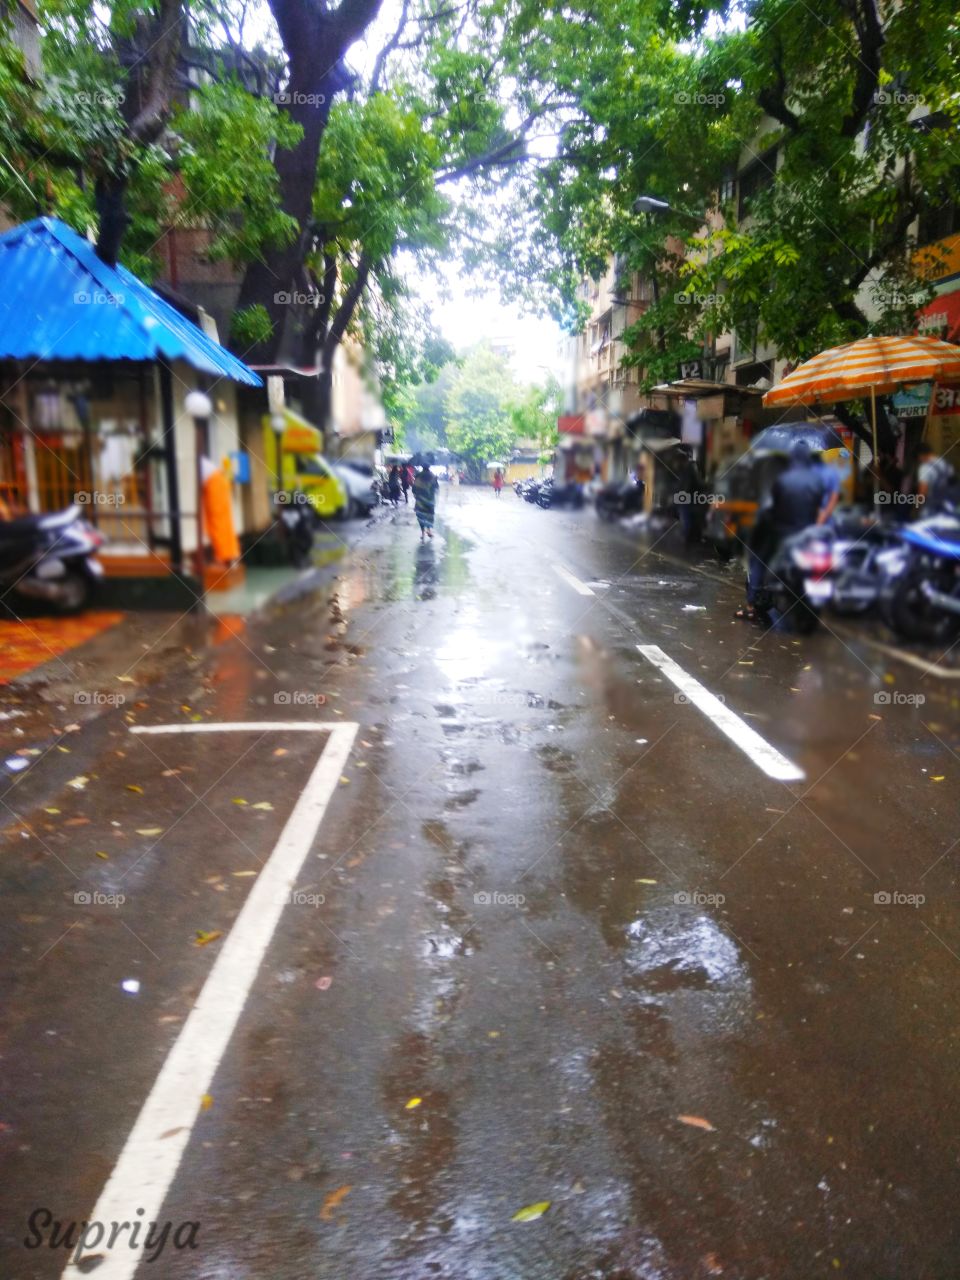 Pune street in rainy days